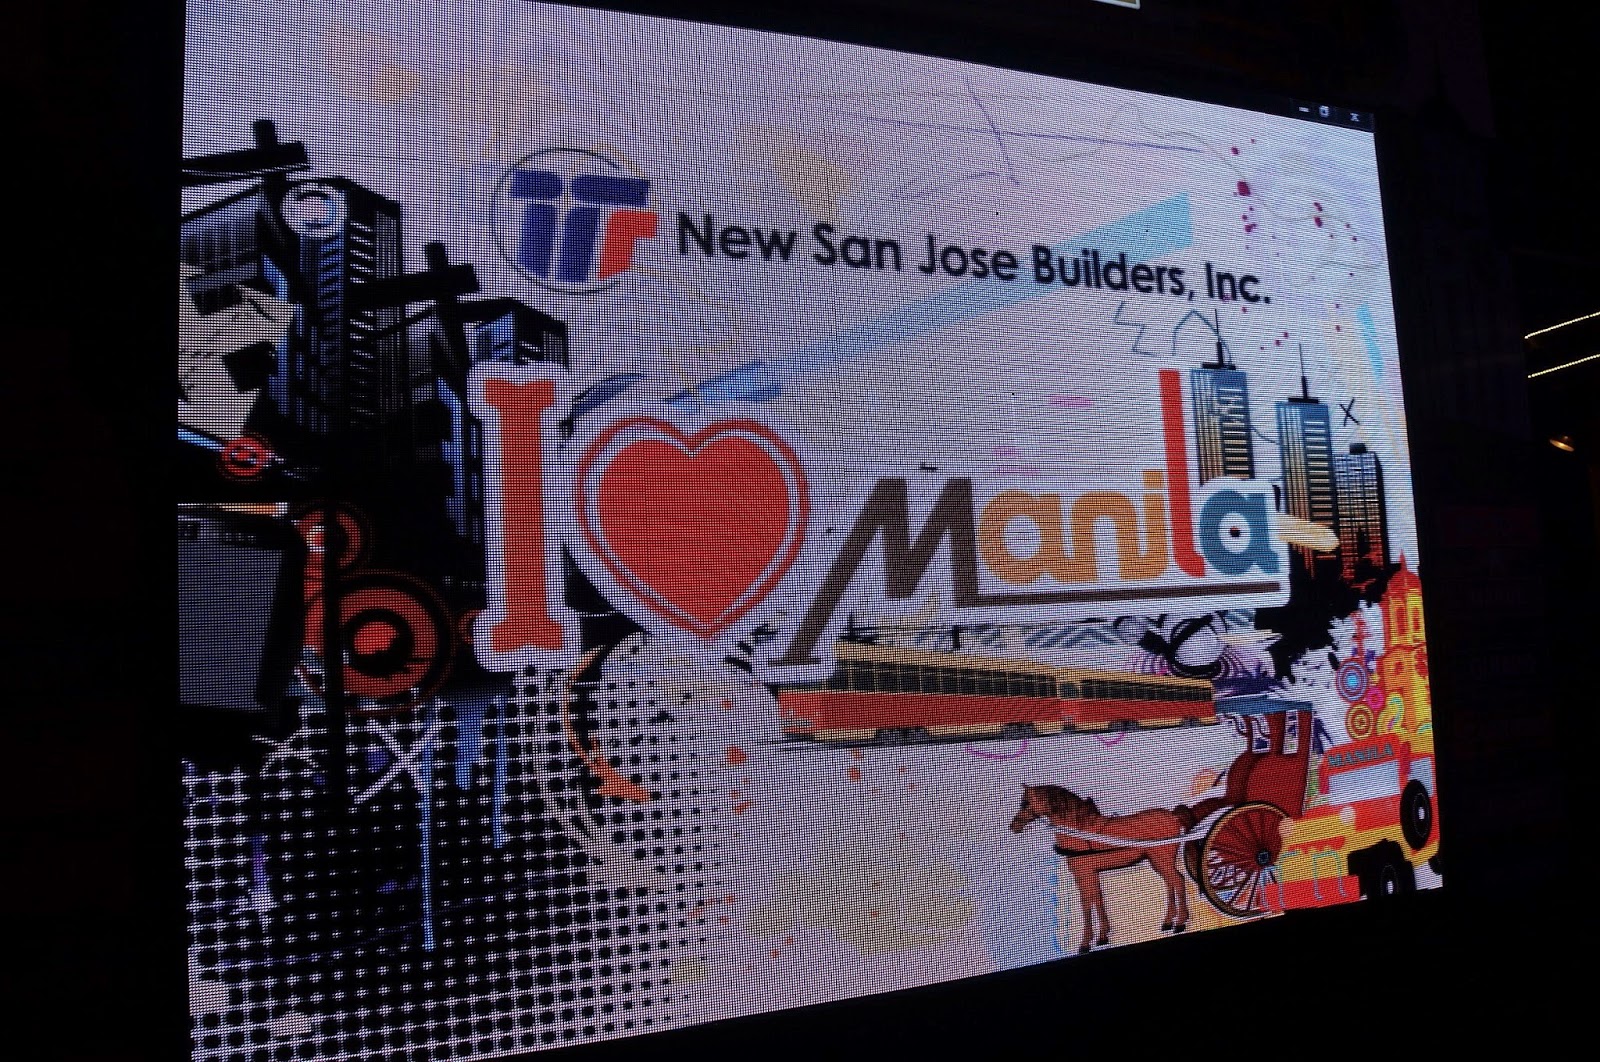 New San Jose Builders Re Launched Victoria De Manila 2 At The I